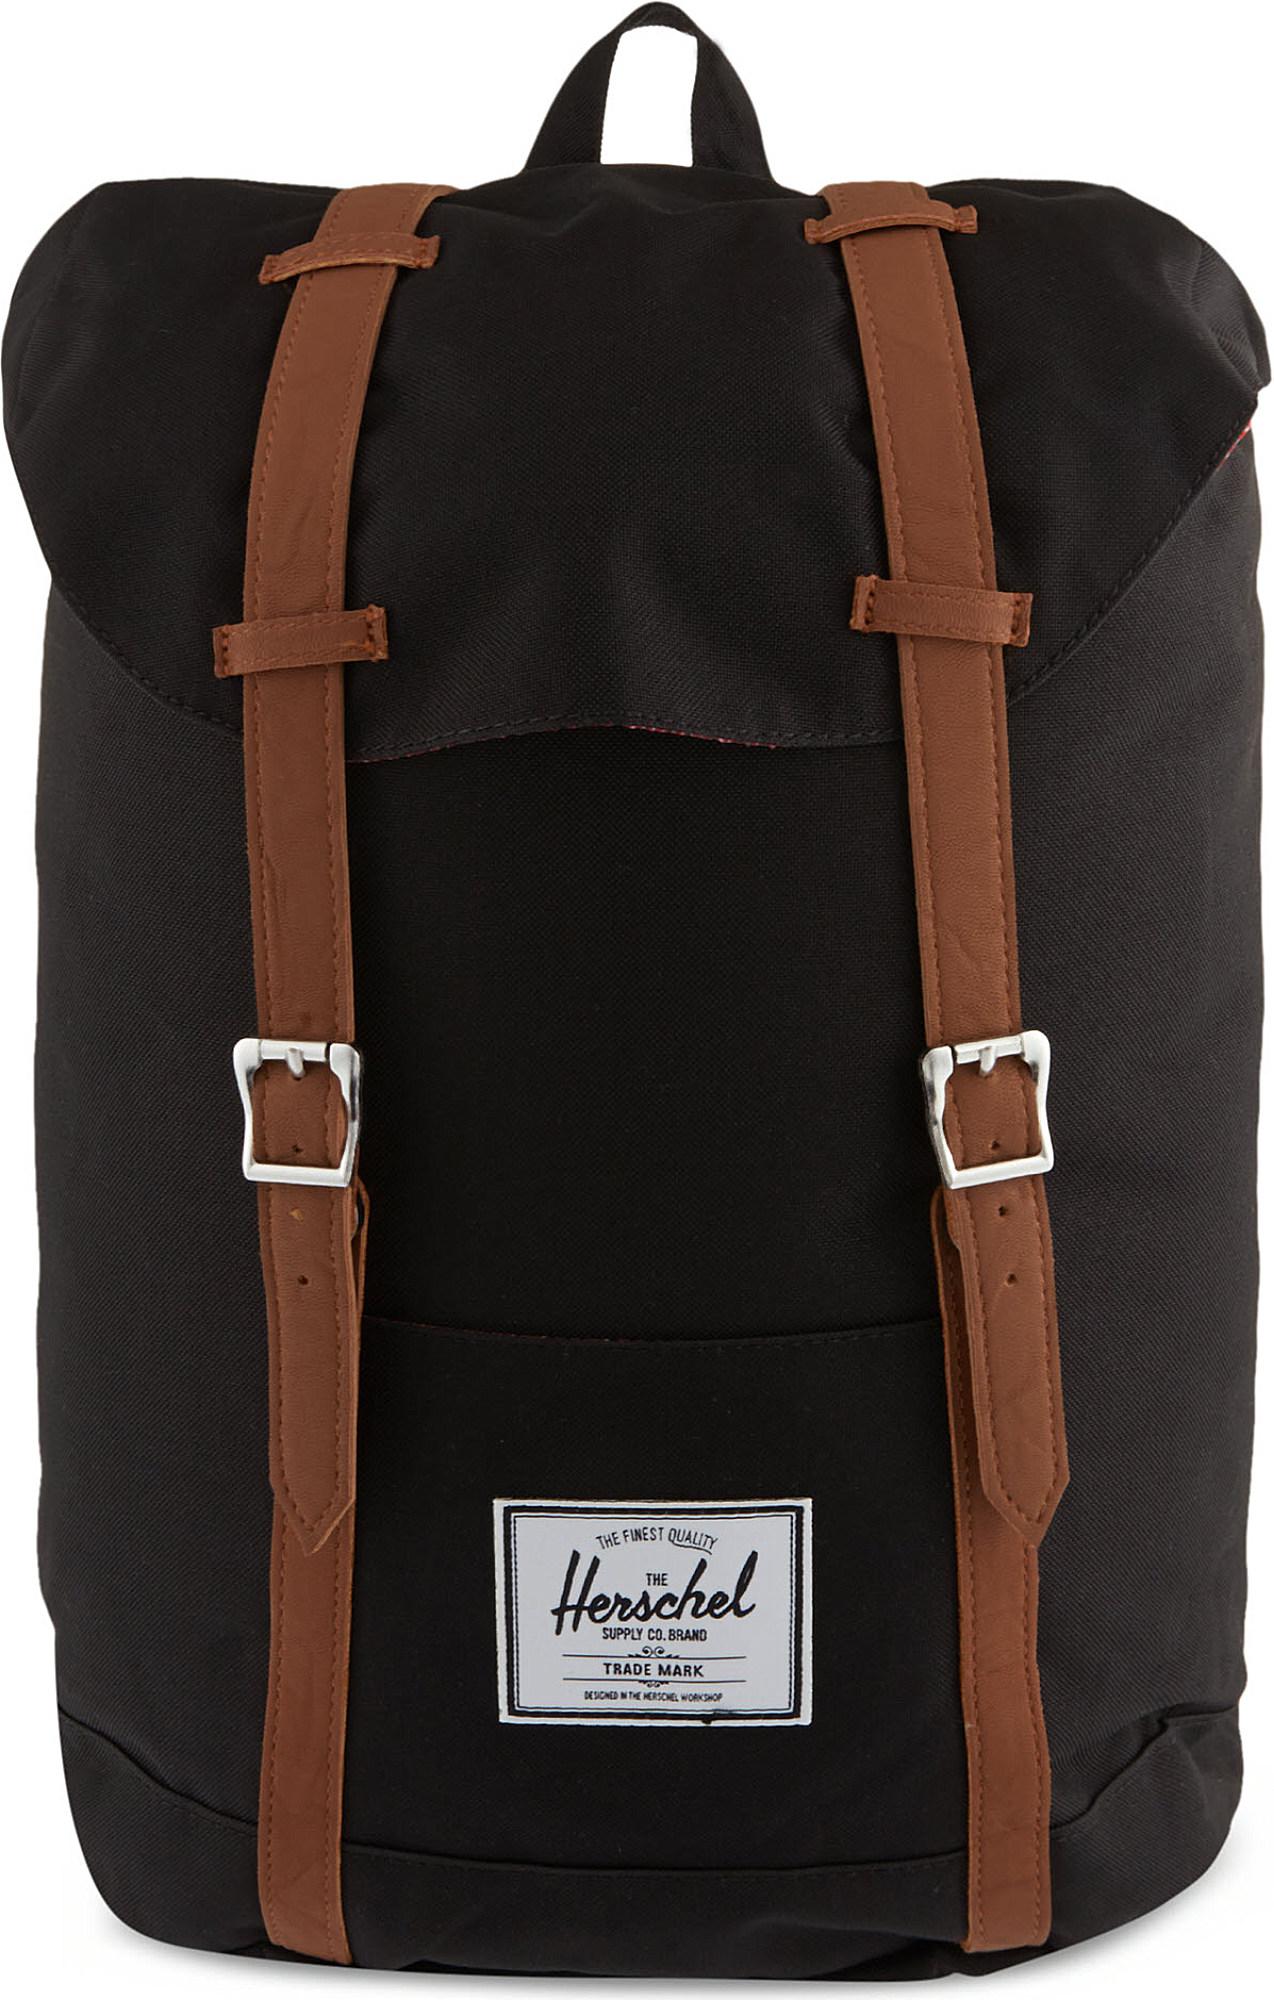 Herschel Supply Co. Retreat Backpack in Black for Men - Lyst